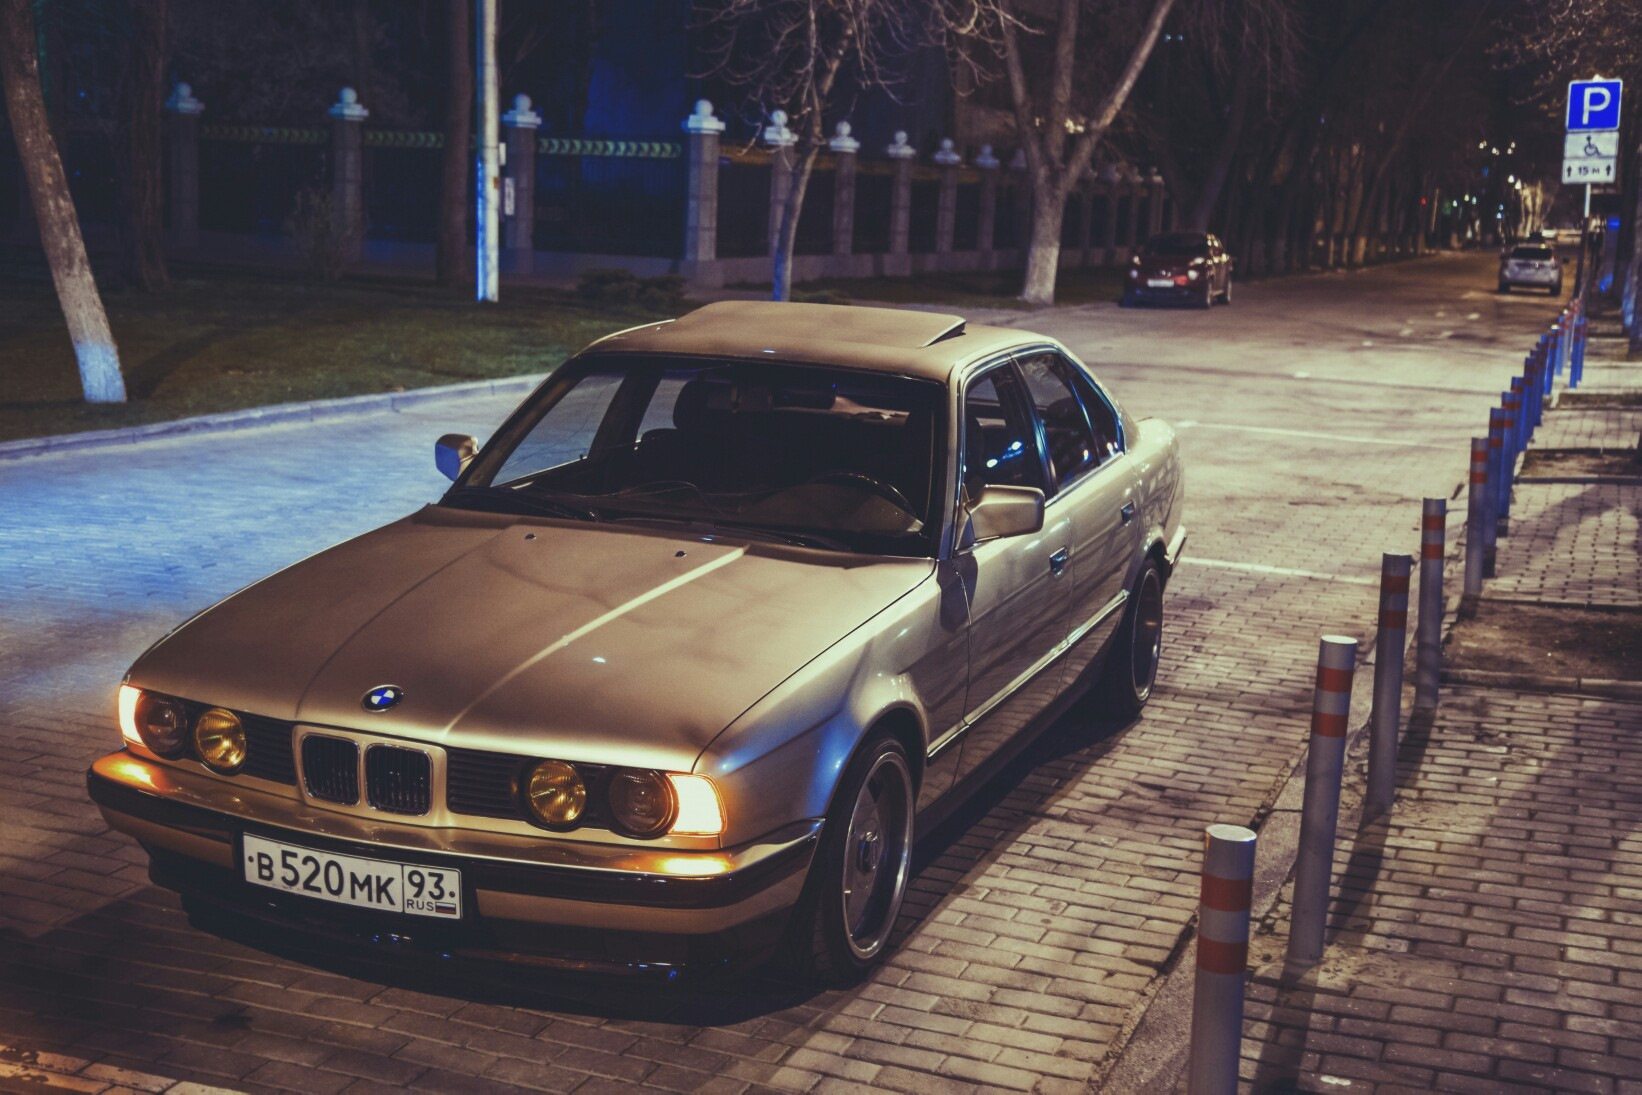 Авито краснодарский бмв. BMW Краснодар. Быушная БМВ Краснодар. - BMW 5 Series, 2.5 л., 1990 года на drive2 цена.